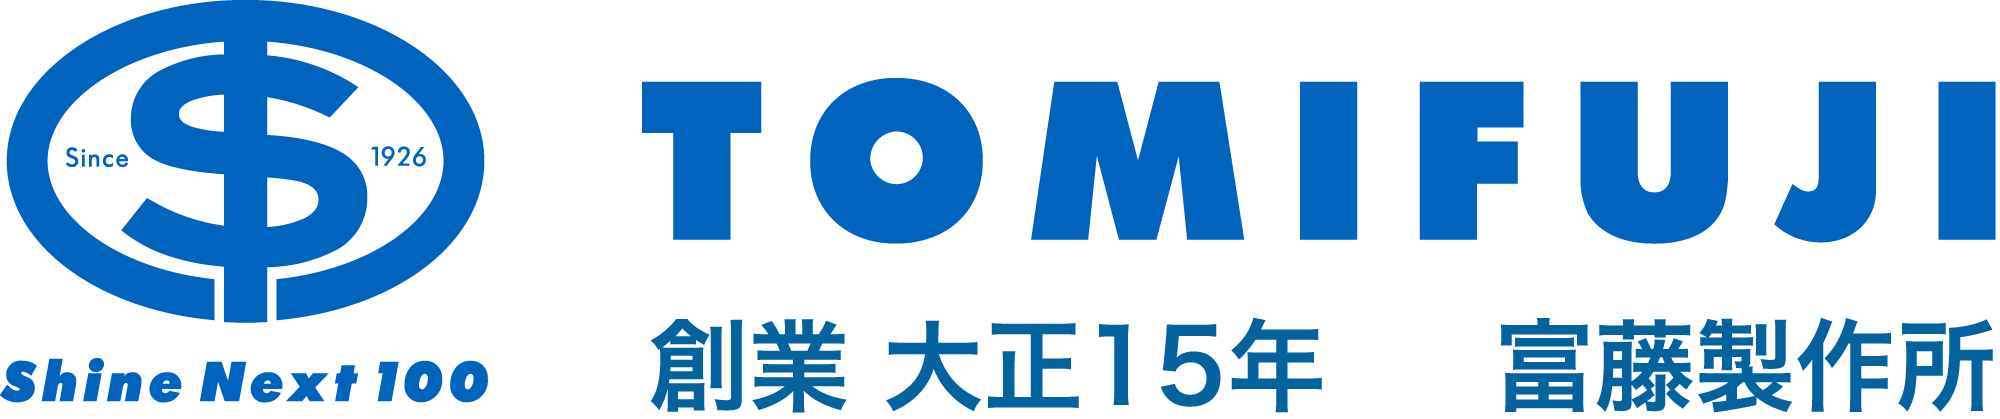 tomifuji_header_logo